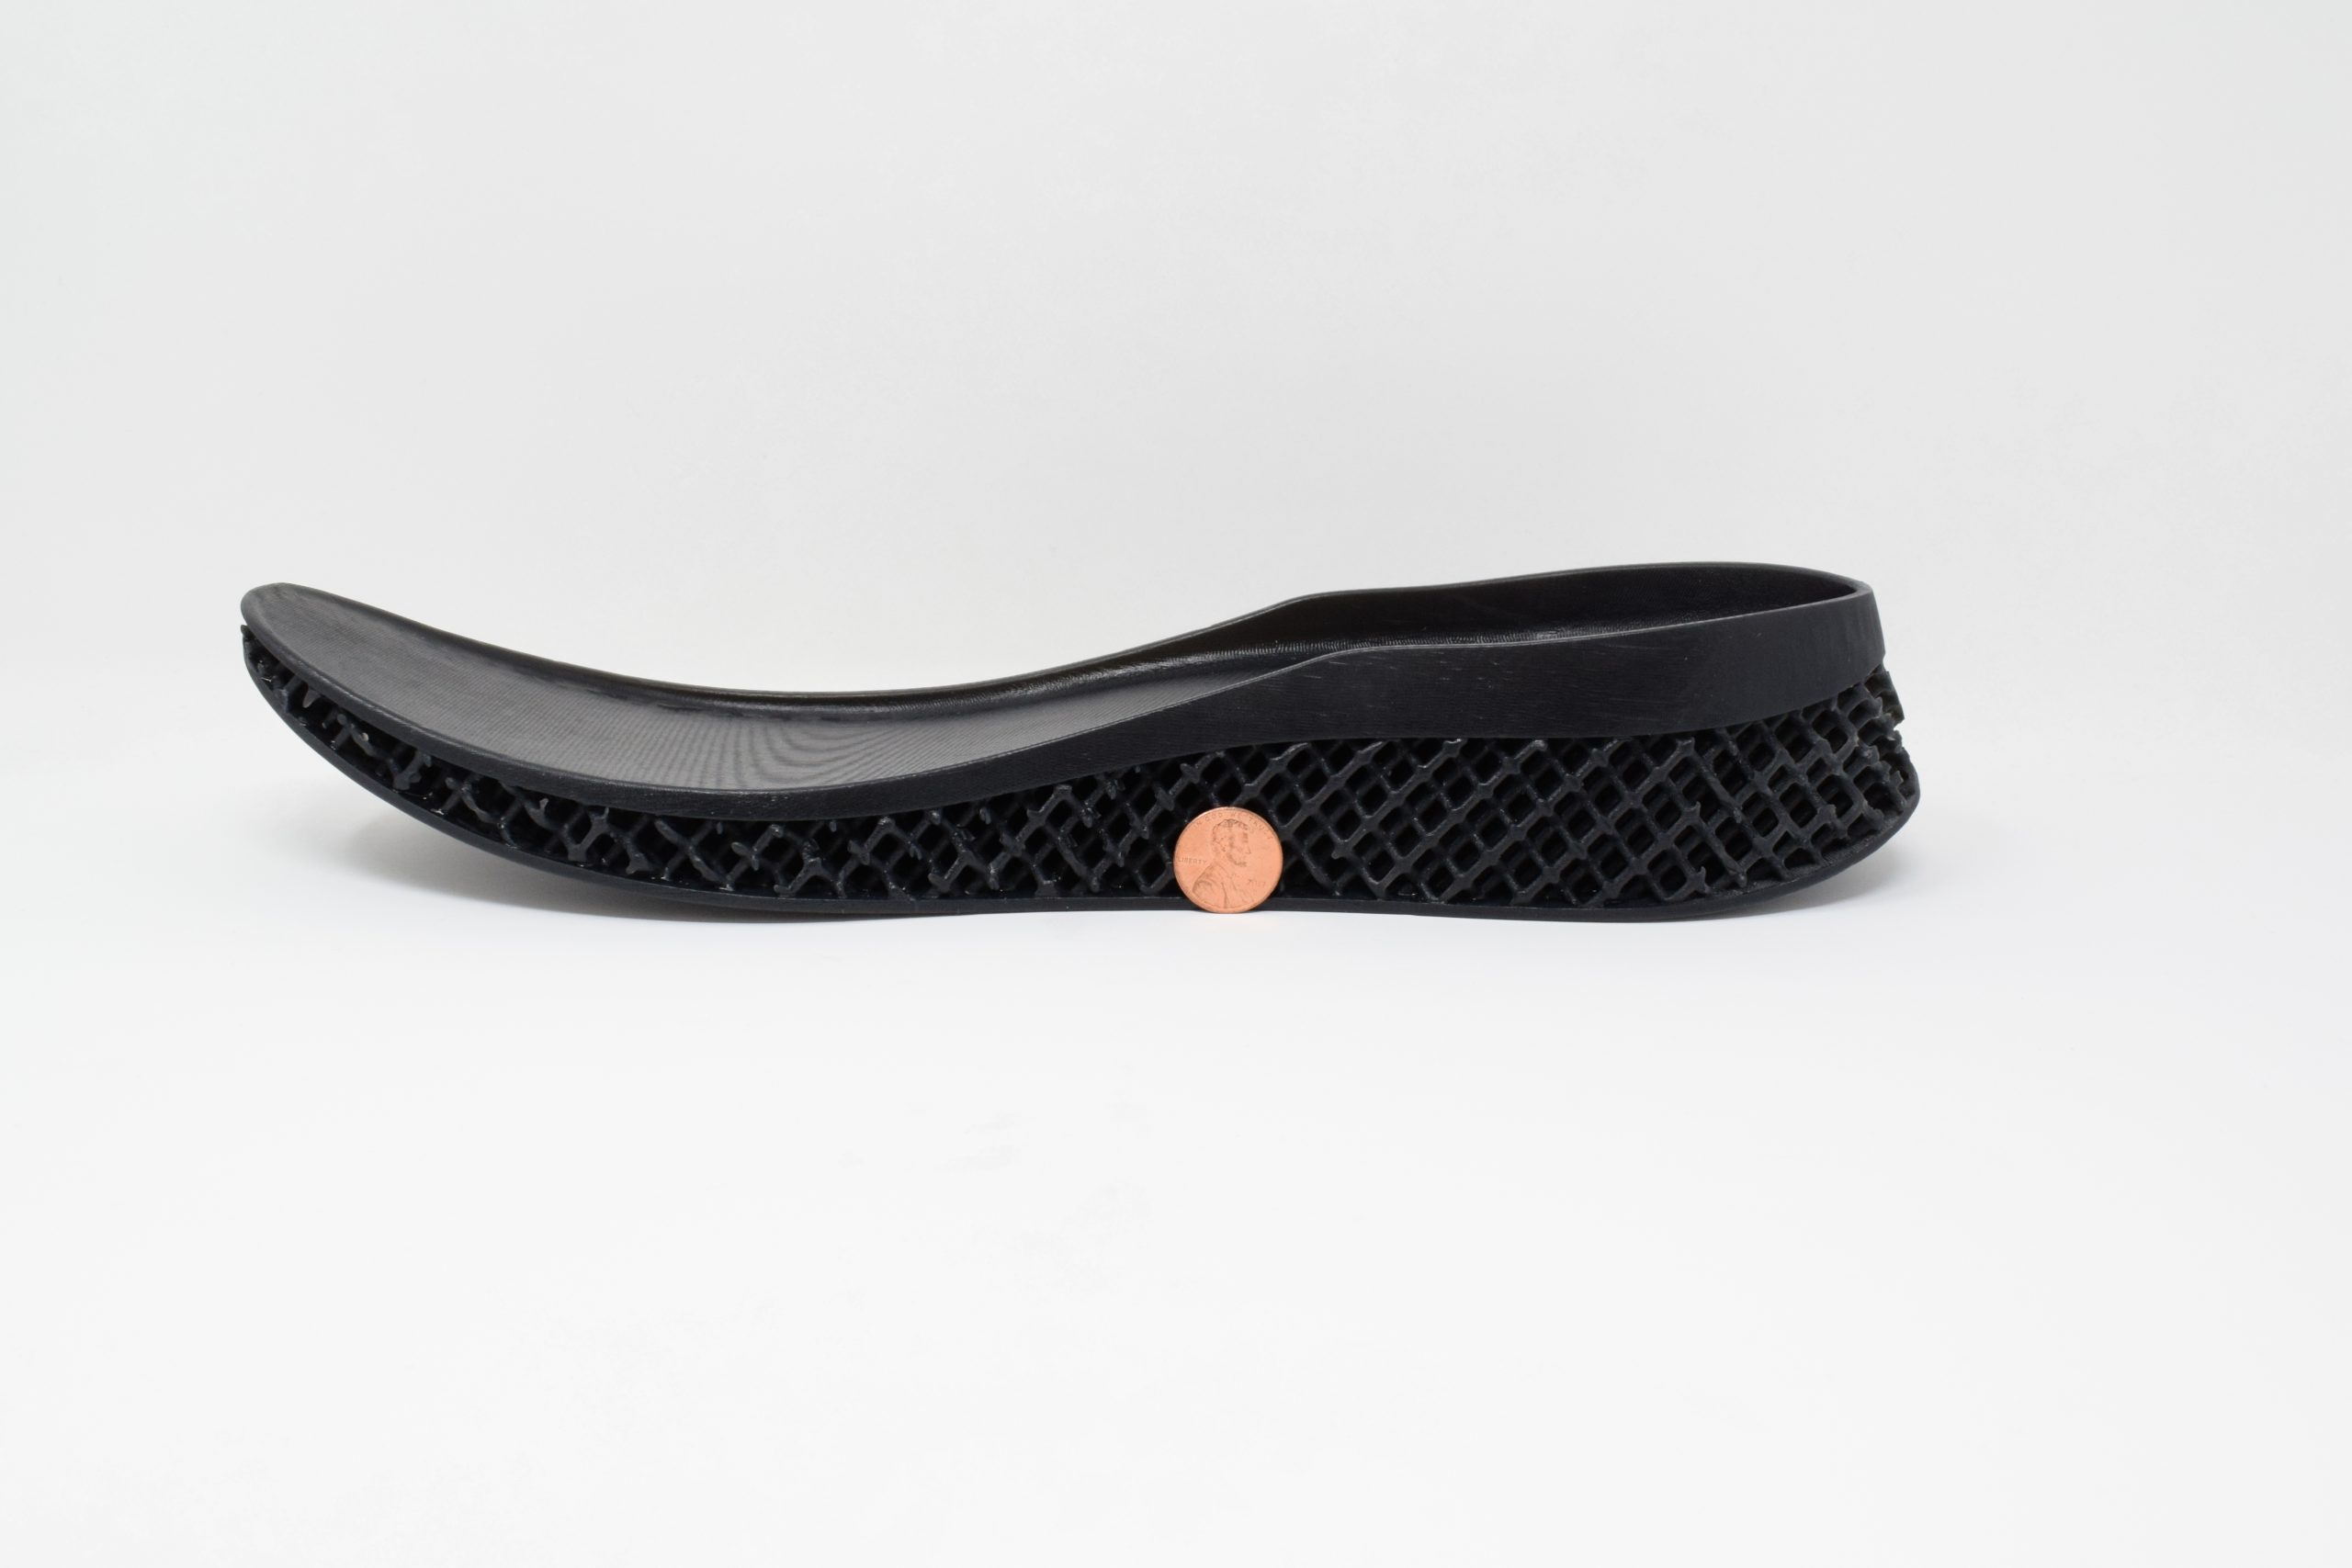 A full-size 3D printed shoe midsole. Photo via Adaptive3D.